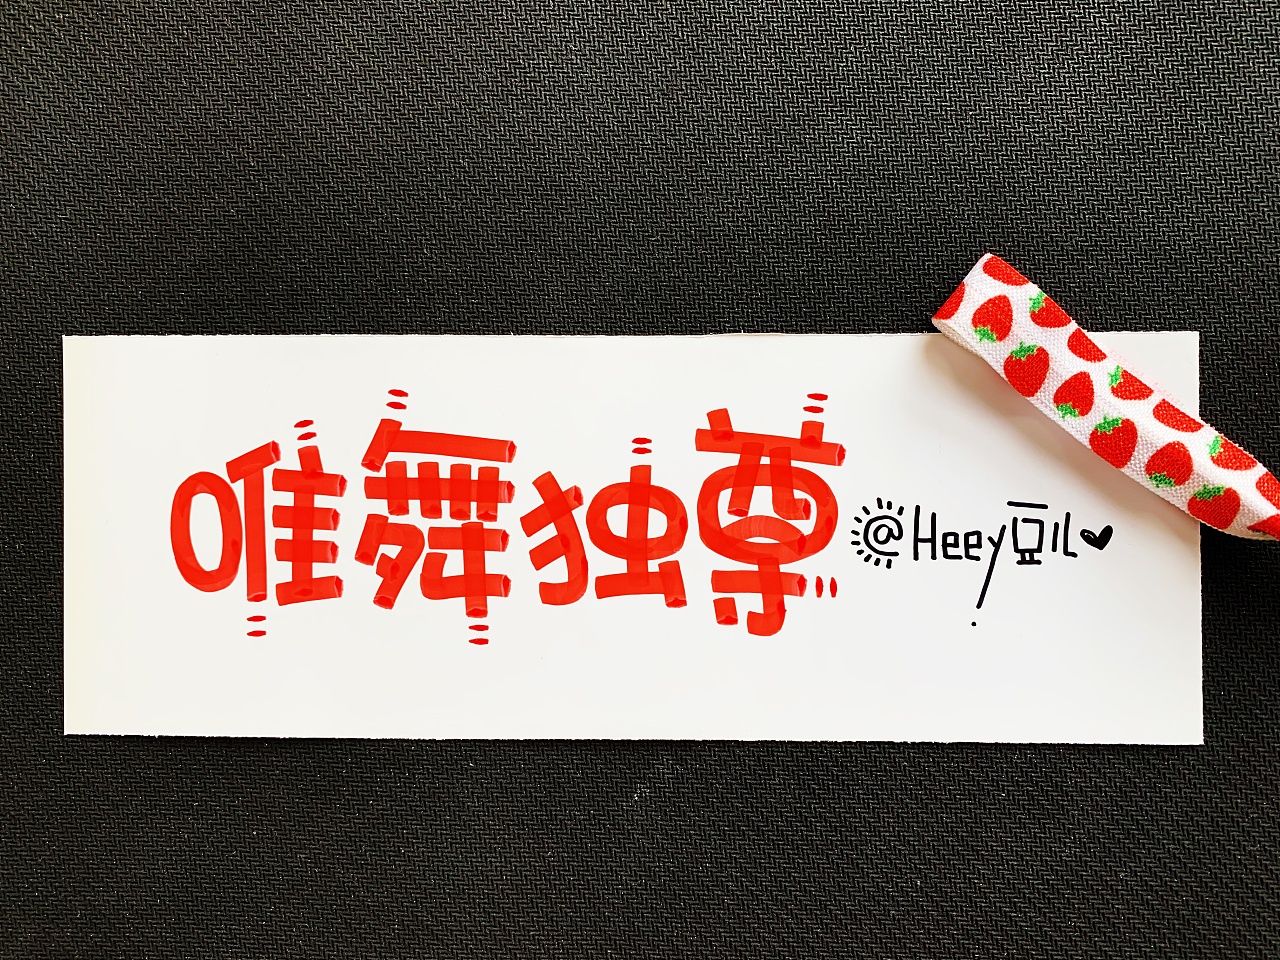 Chinese Creative Font Design-Heey Doo | Mark Pen (Jolin Tsai)